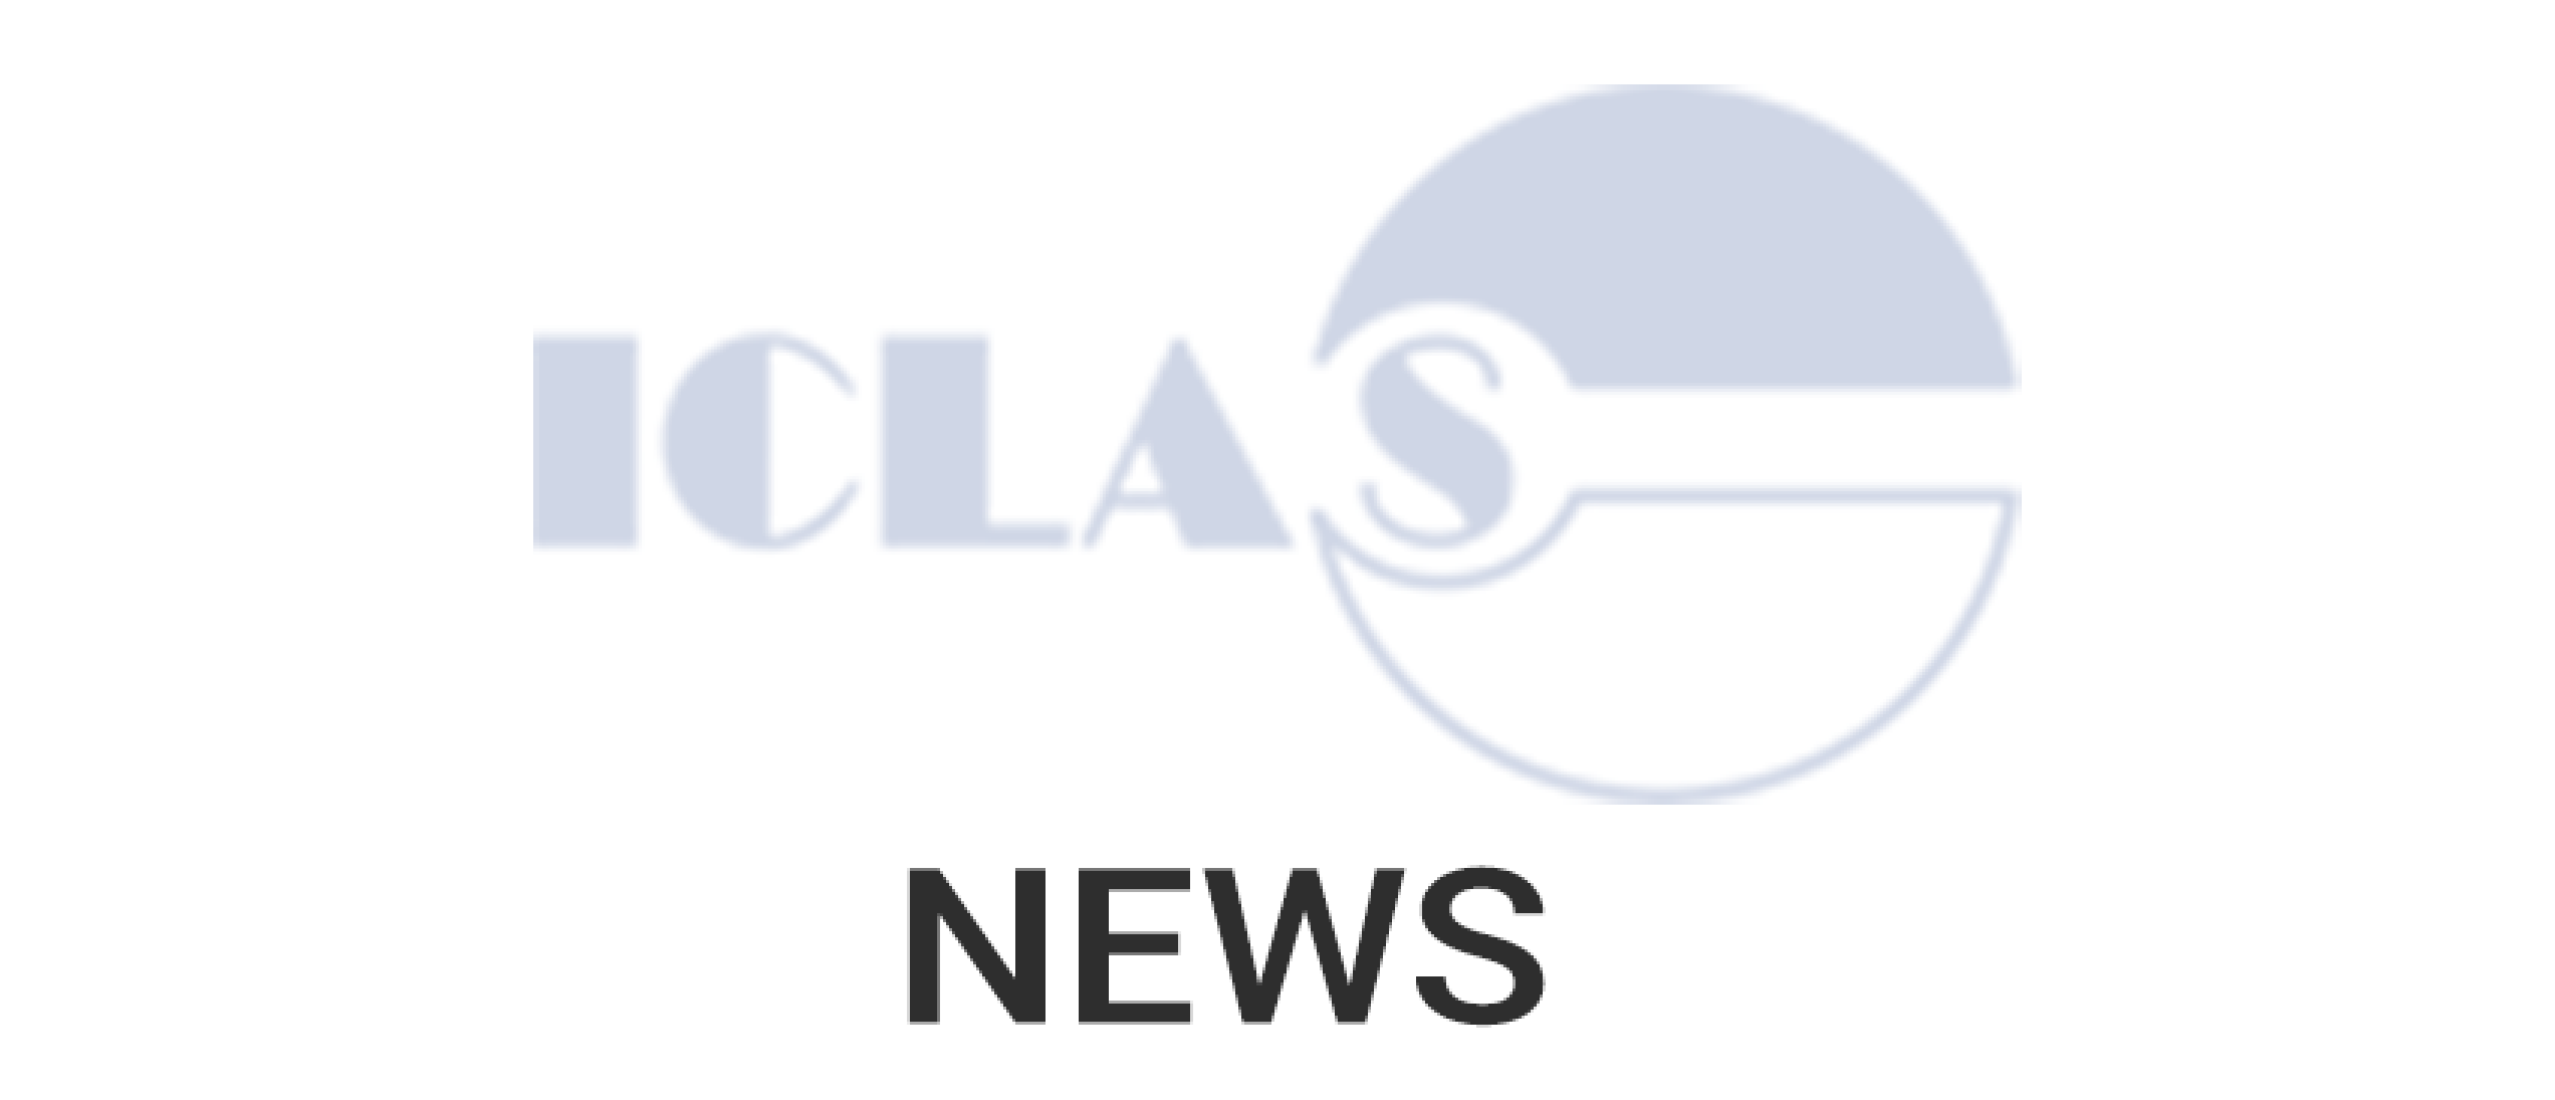 ICLAS News Report November 2022